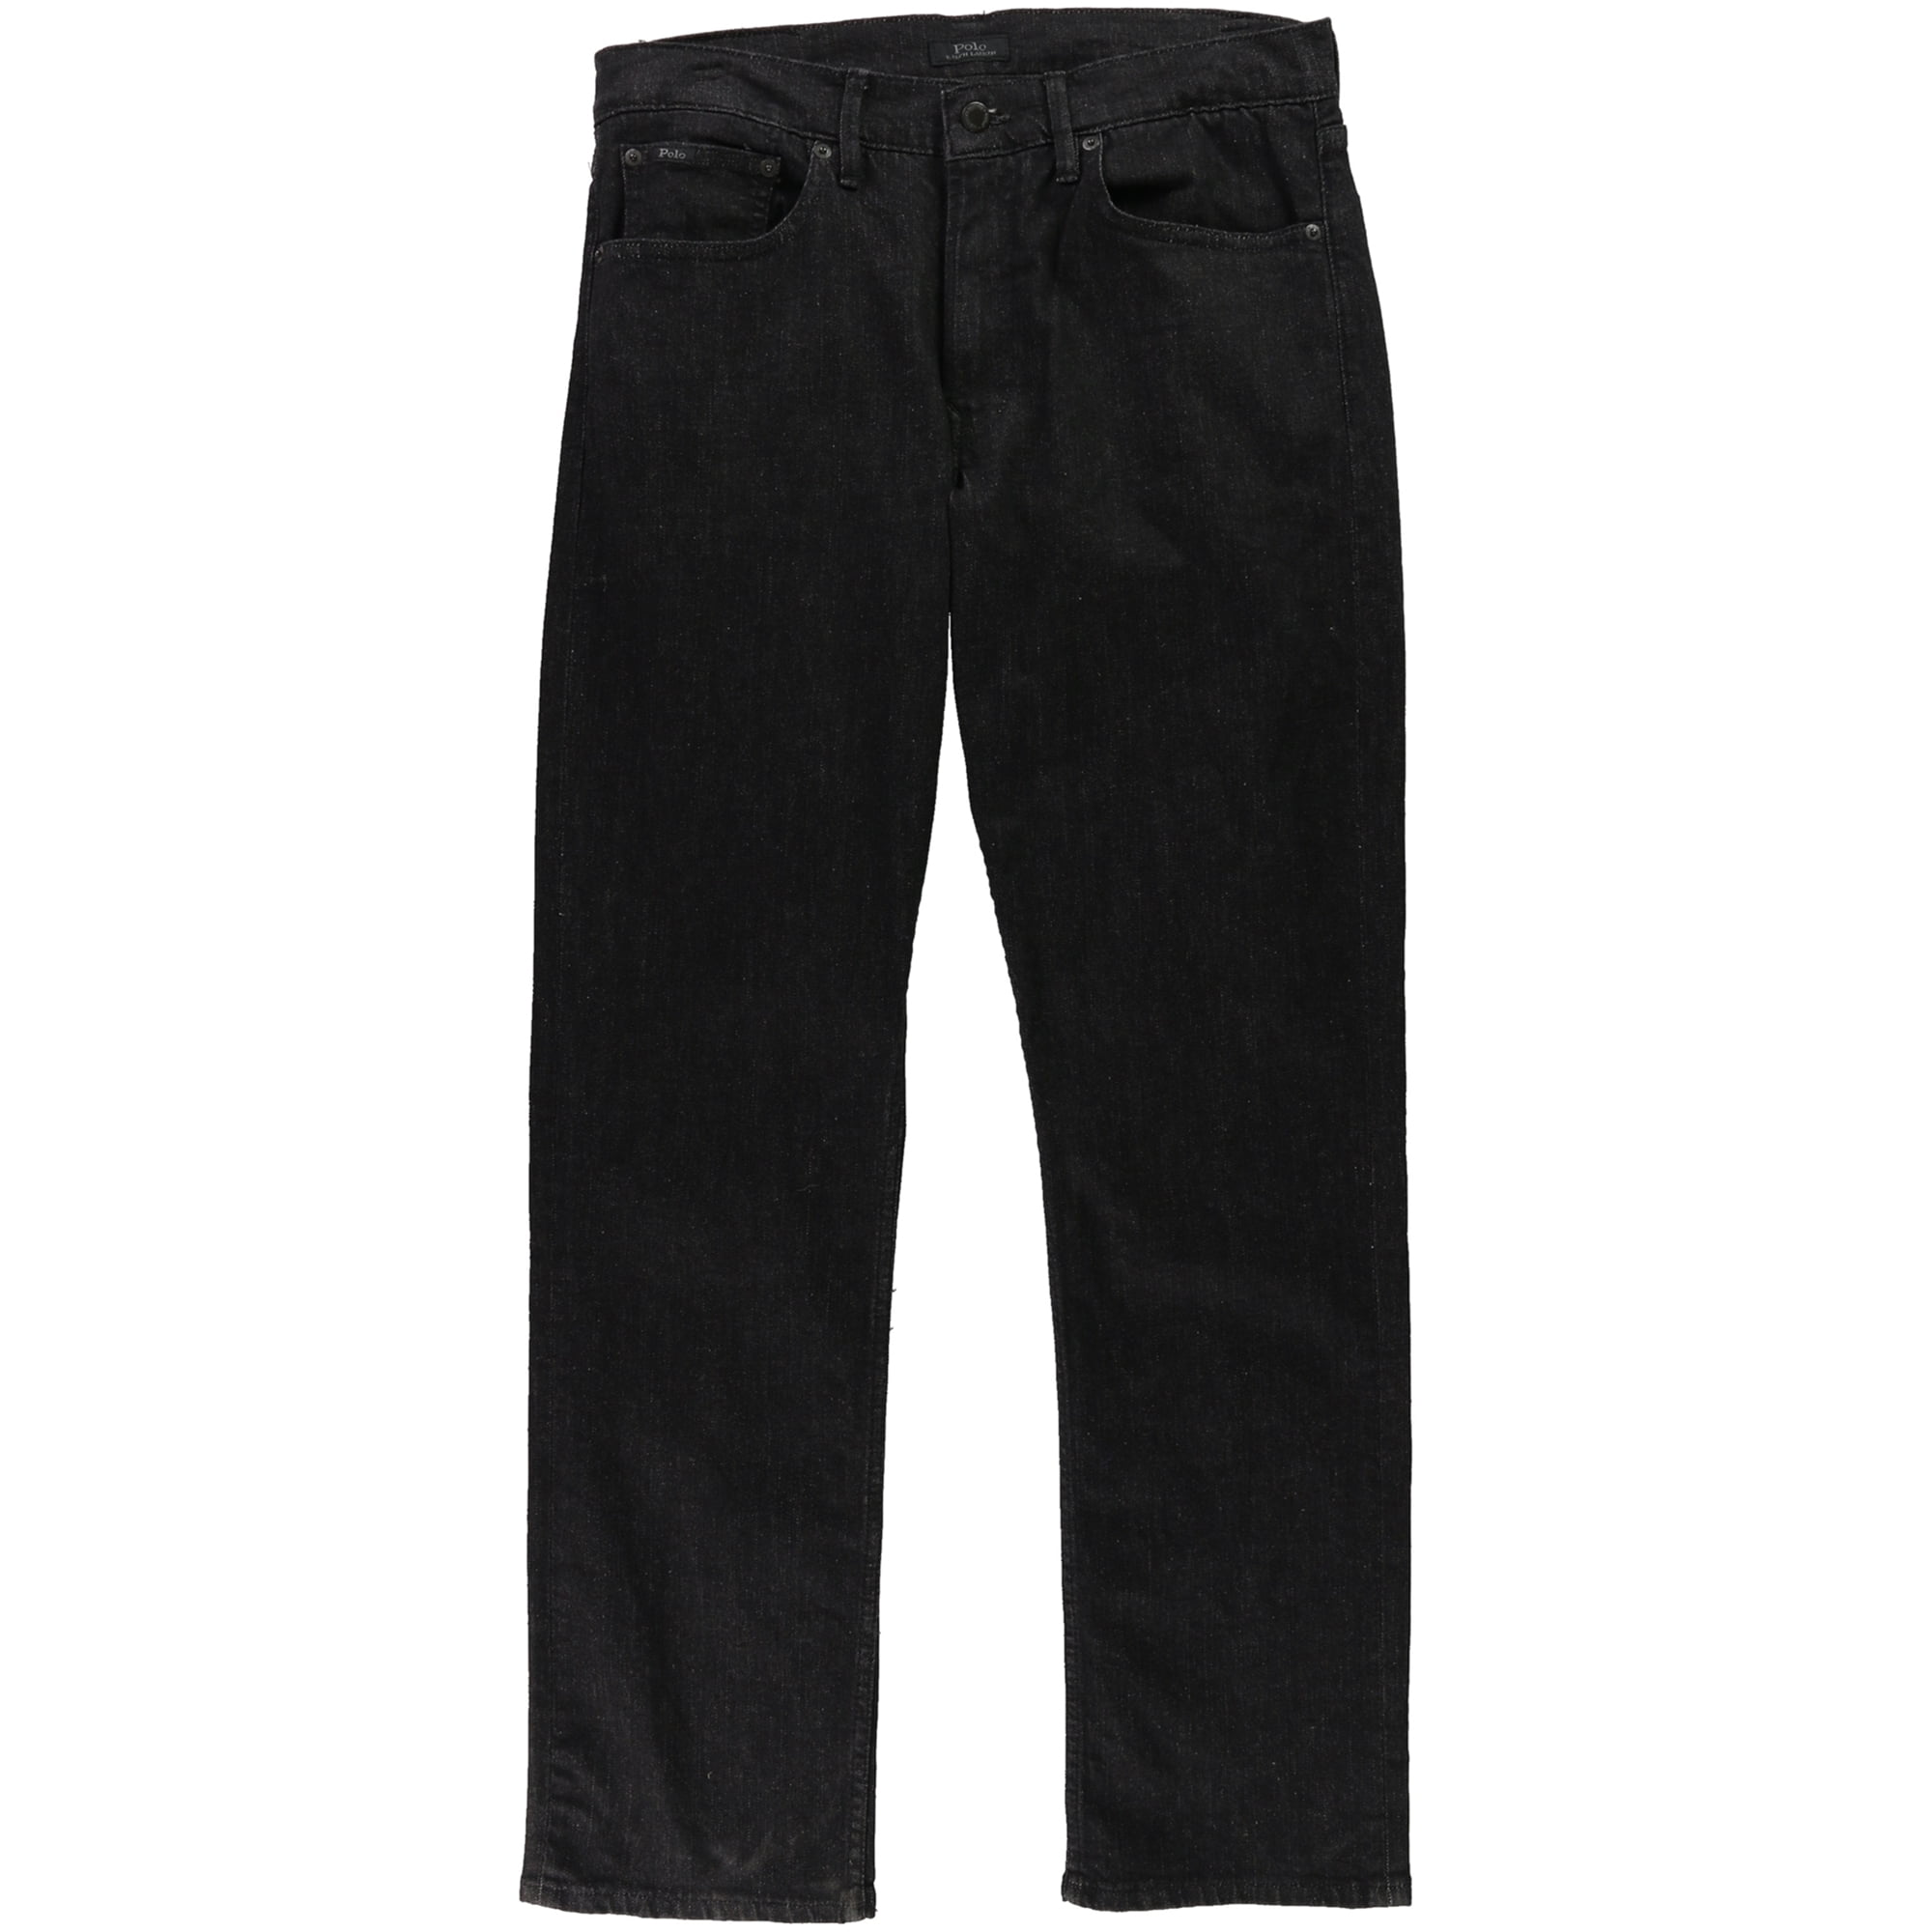 polo ralph lauren men's prospect straight stretch jeans